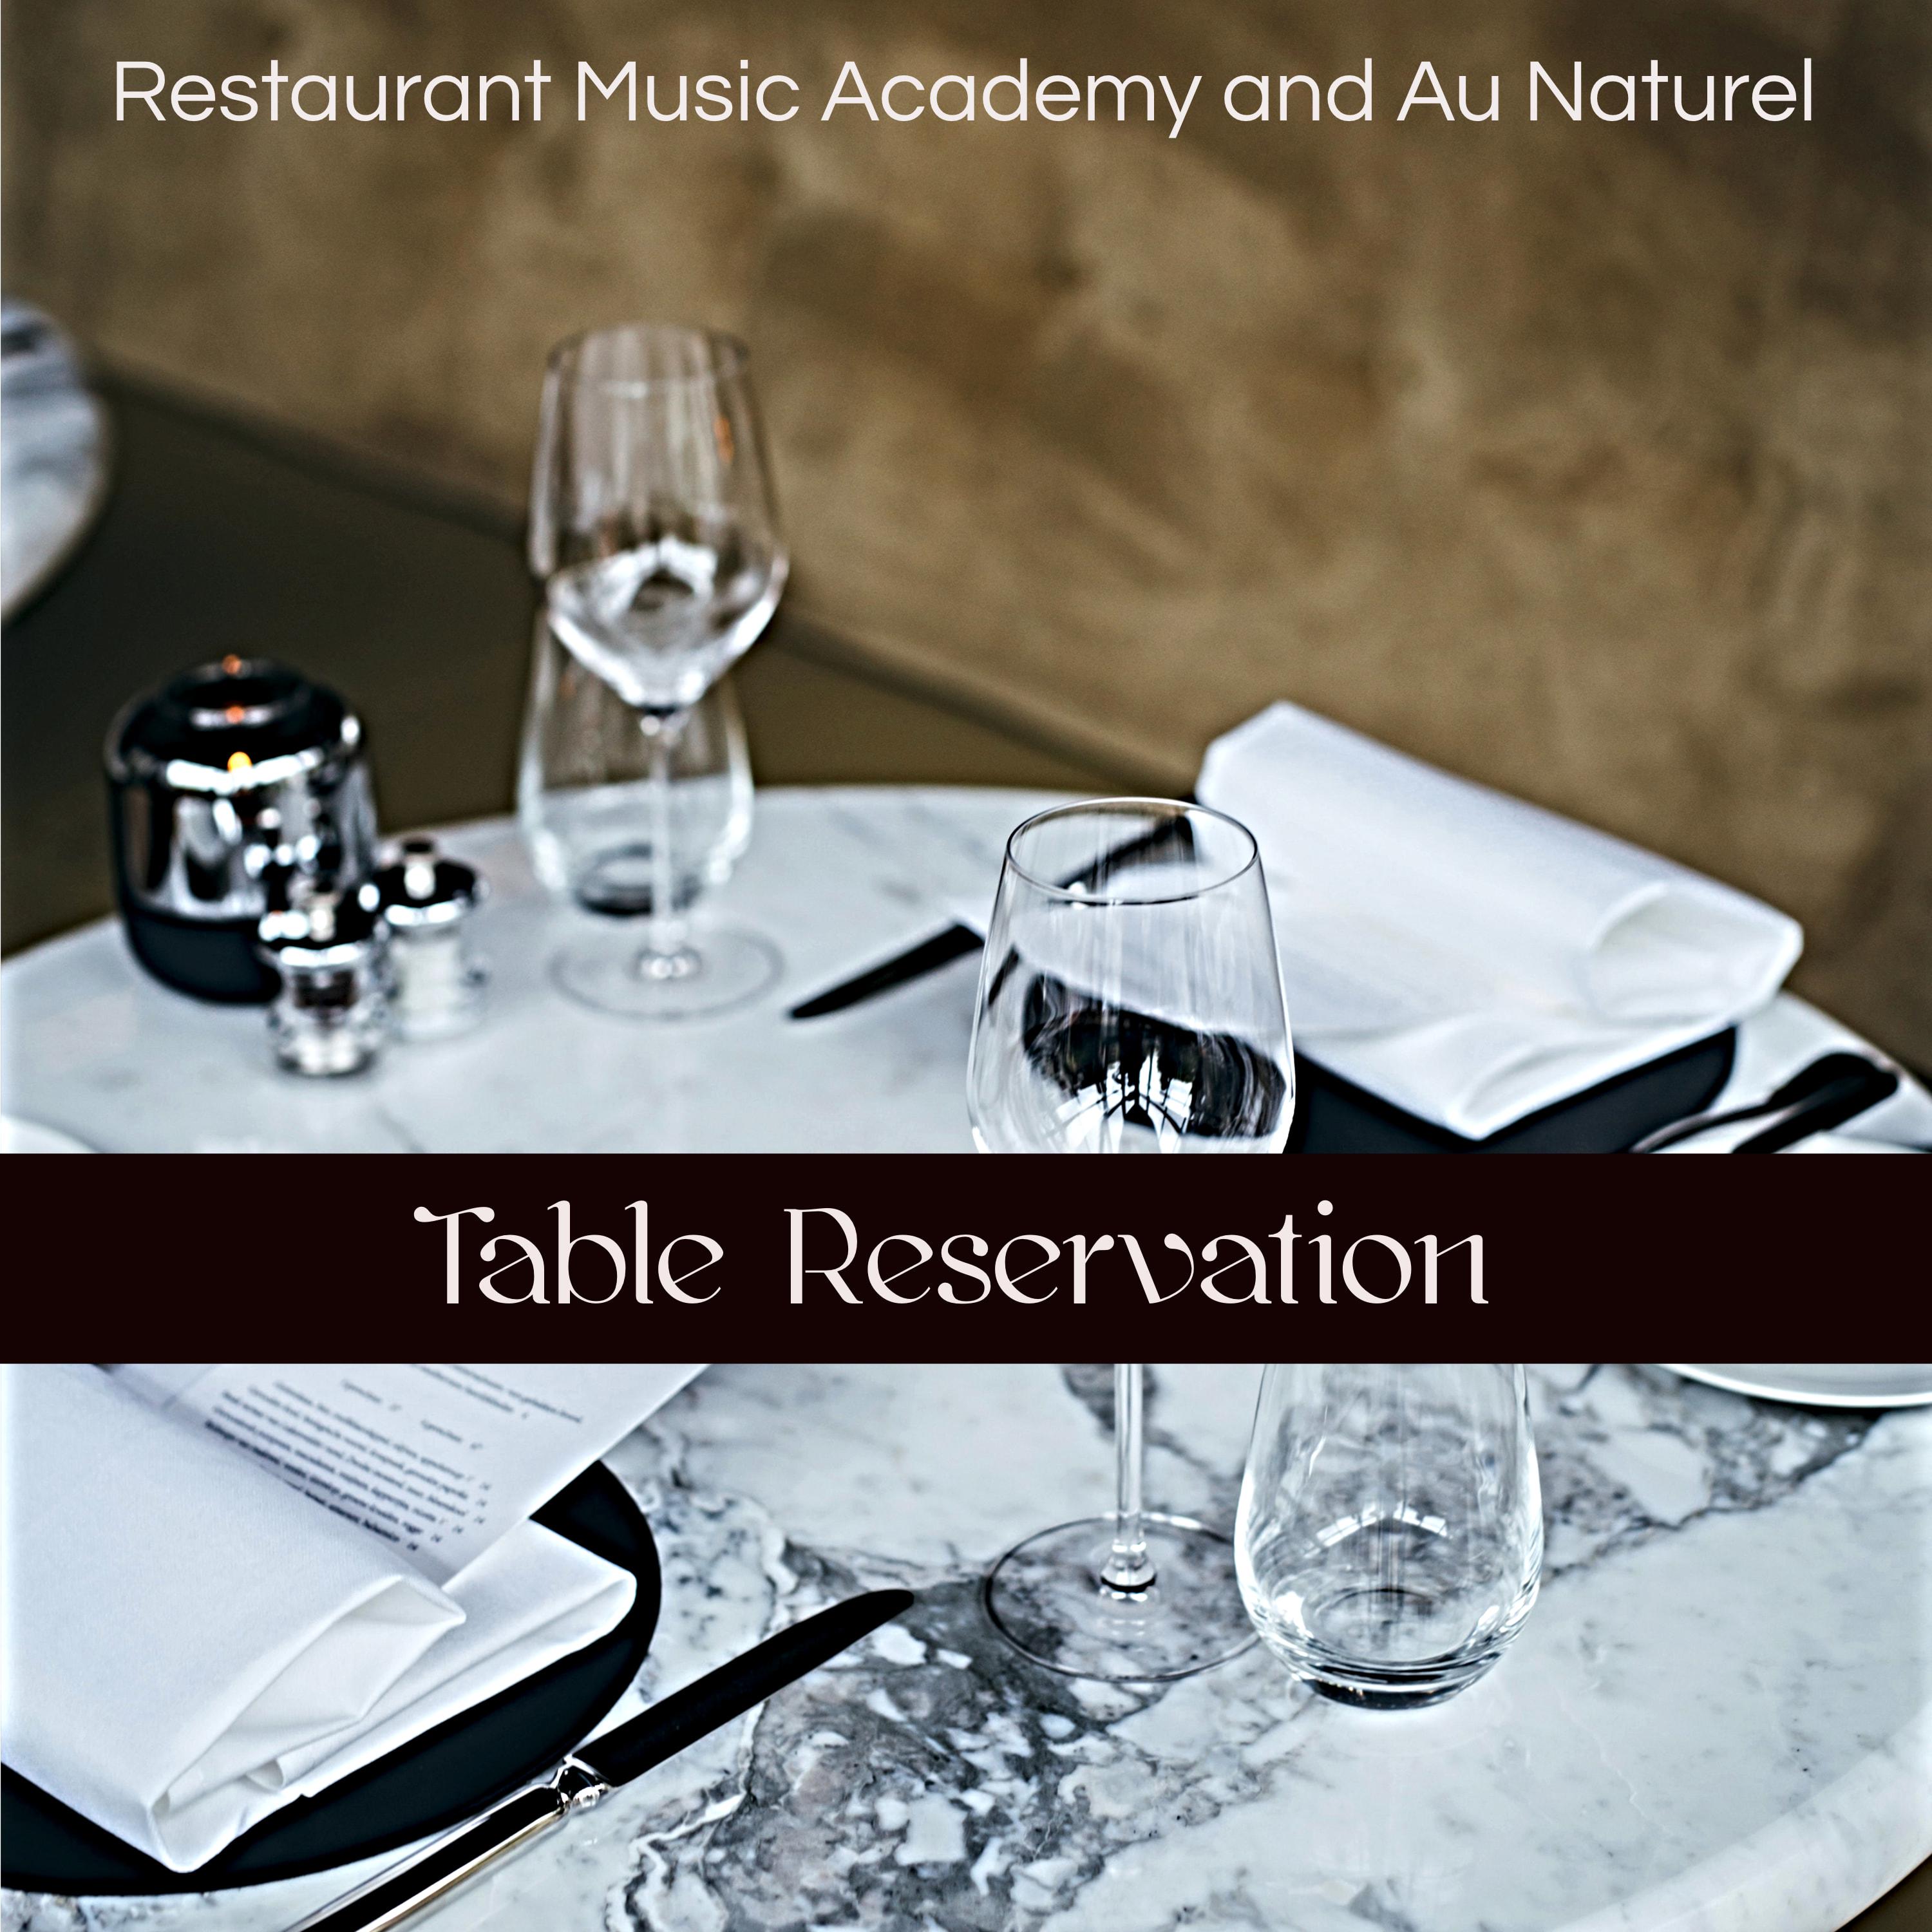 Table Reservation – Bossa Nova Jazz and Piano Bar Restaurant Music Playlist